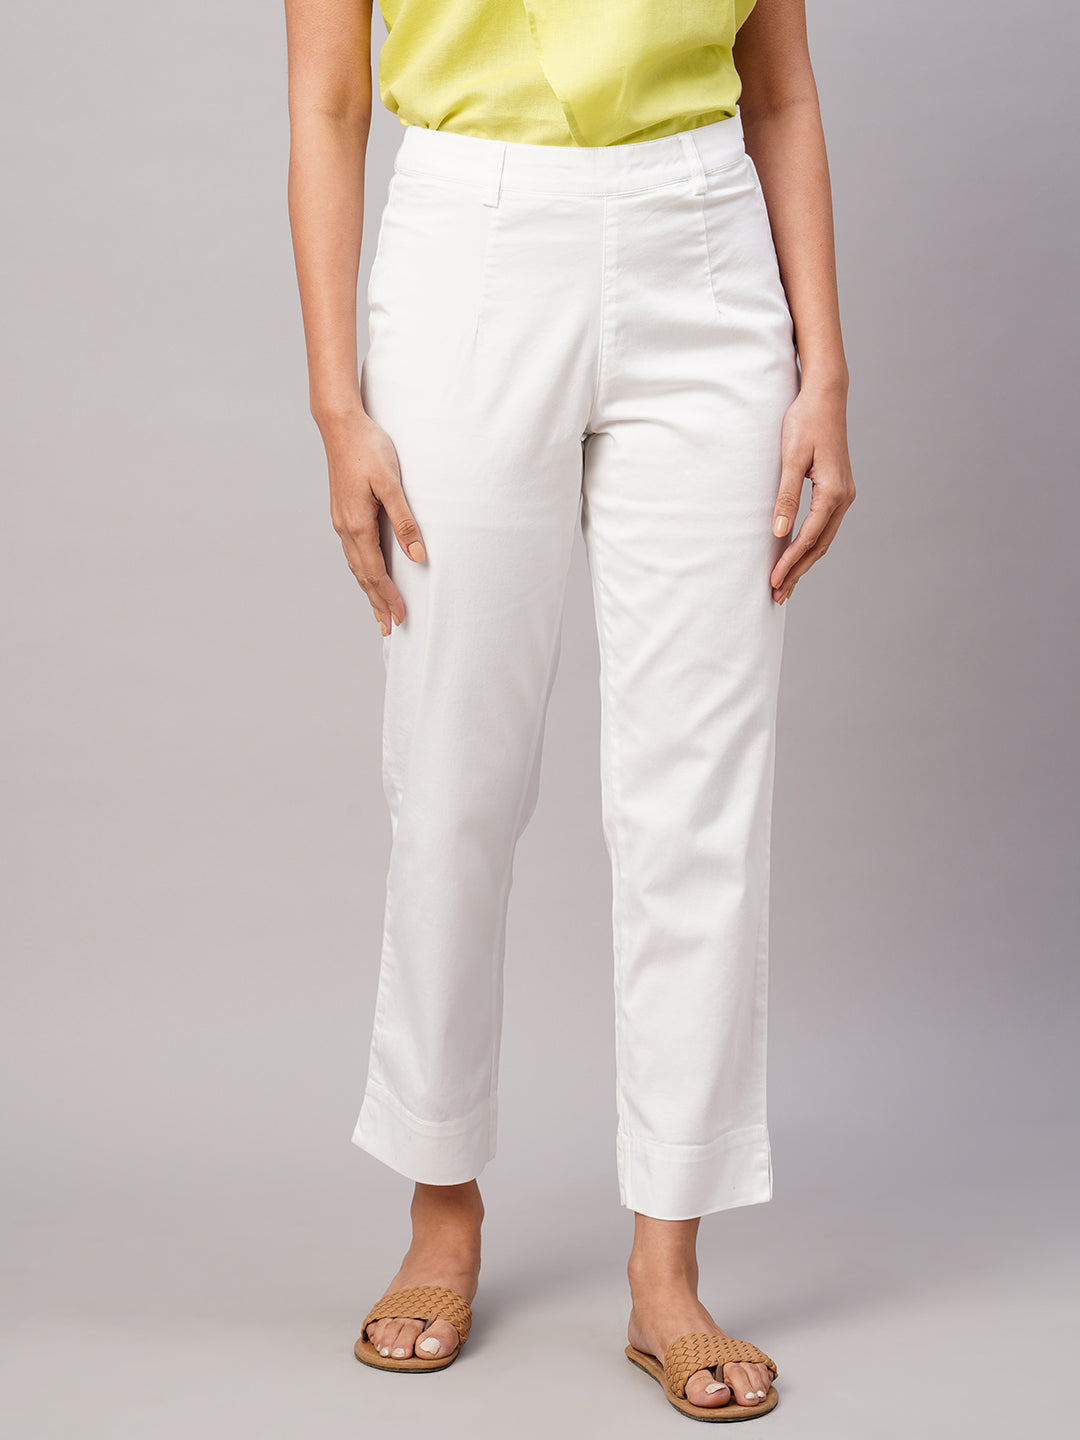 Women's Cotton Lycra White Regular Fit Pant